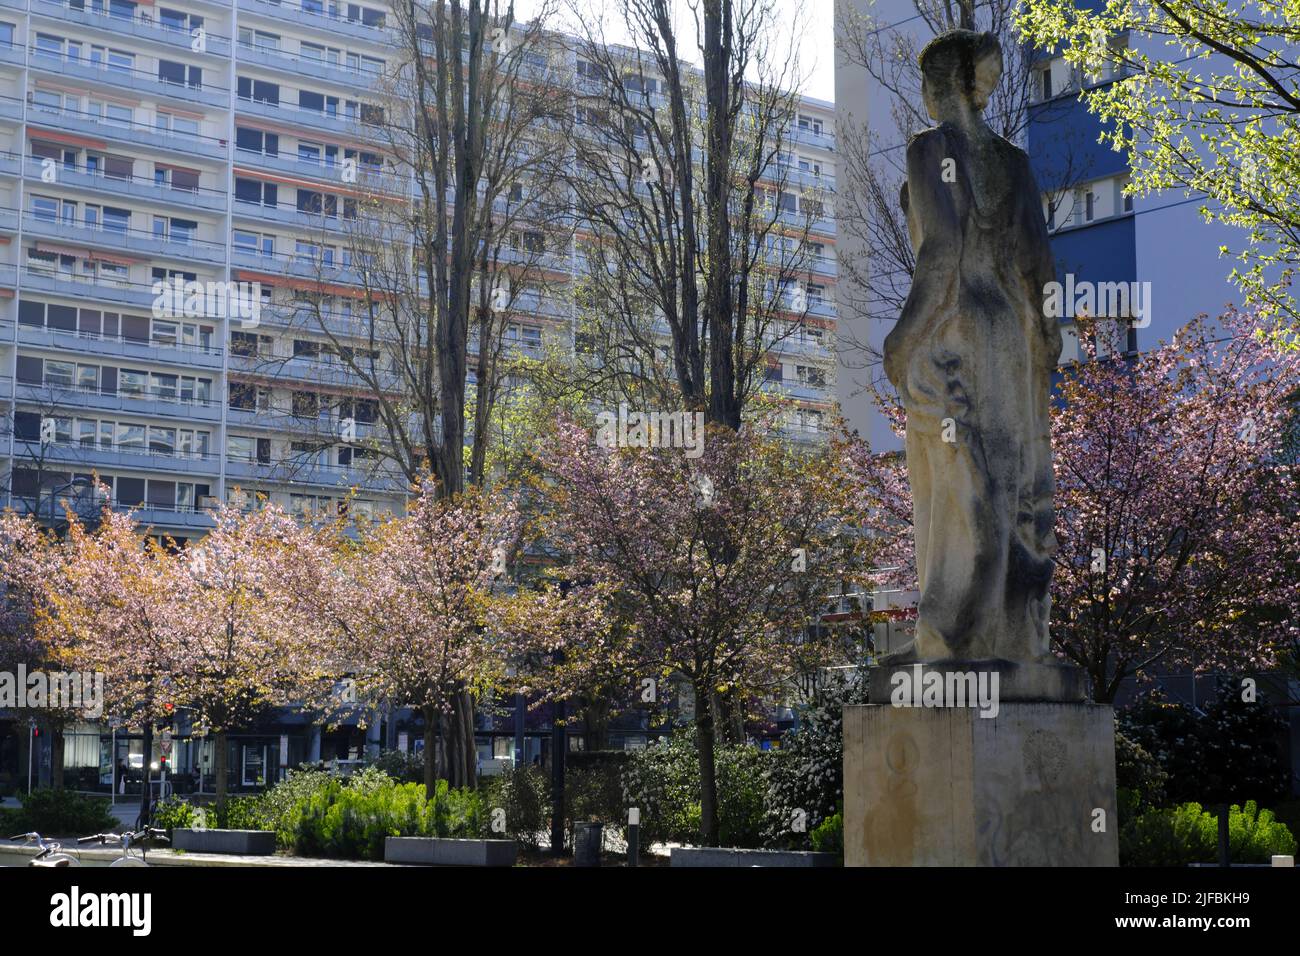 France, Bas Rhin, Strasbourg, Esplanade district, buildings, statue Stock Photo